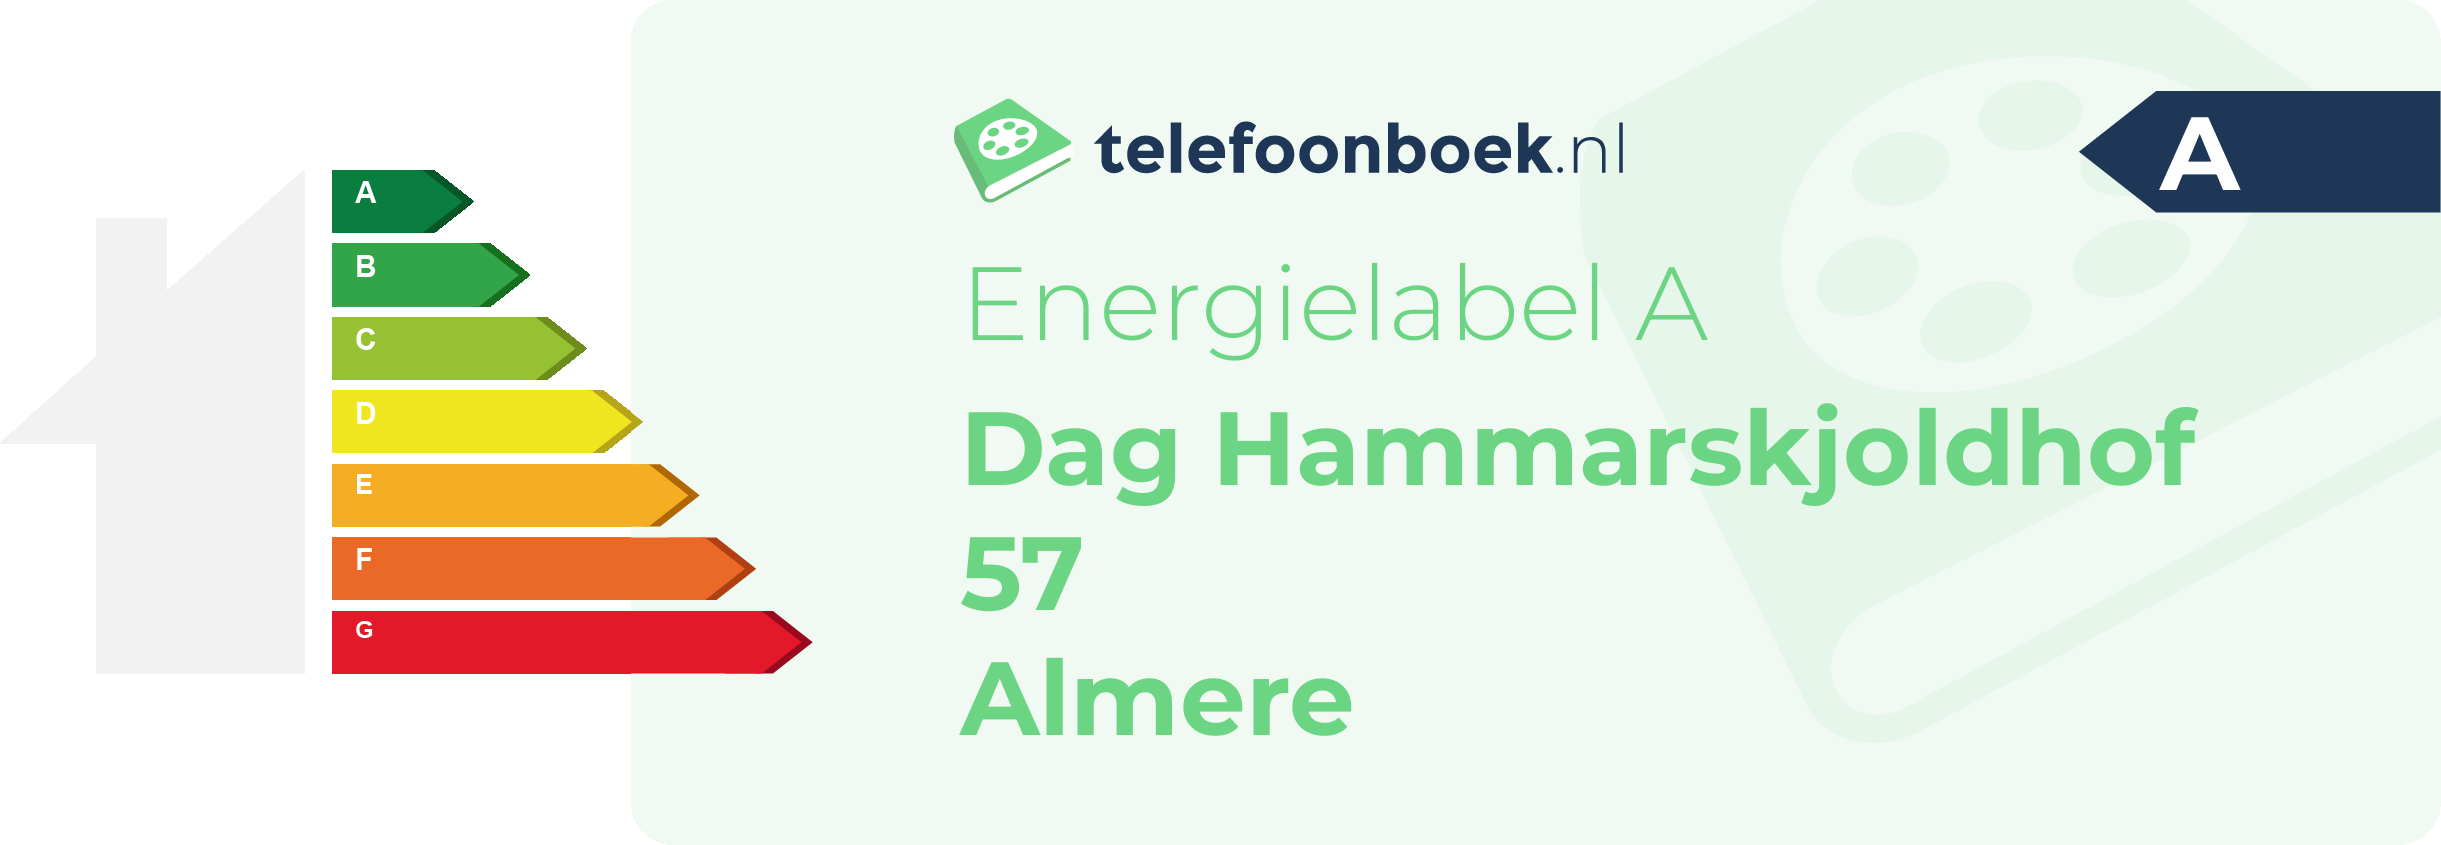 Energielabel Dag Hammarskjoldhof 57 Almere